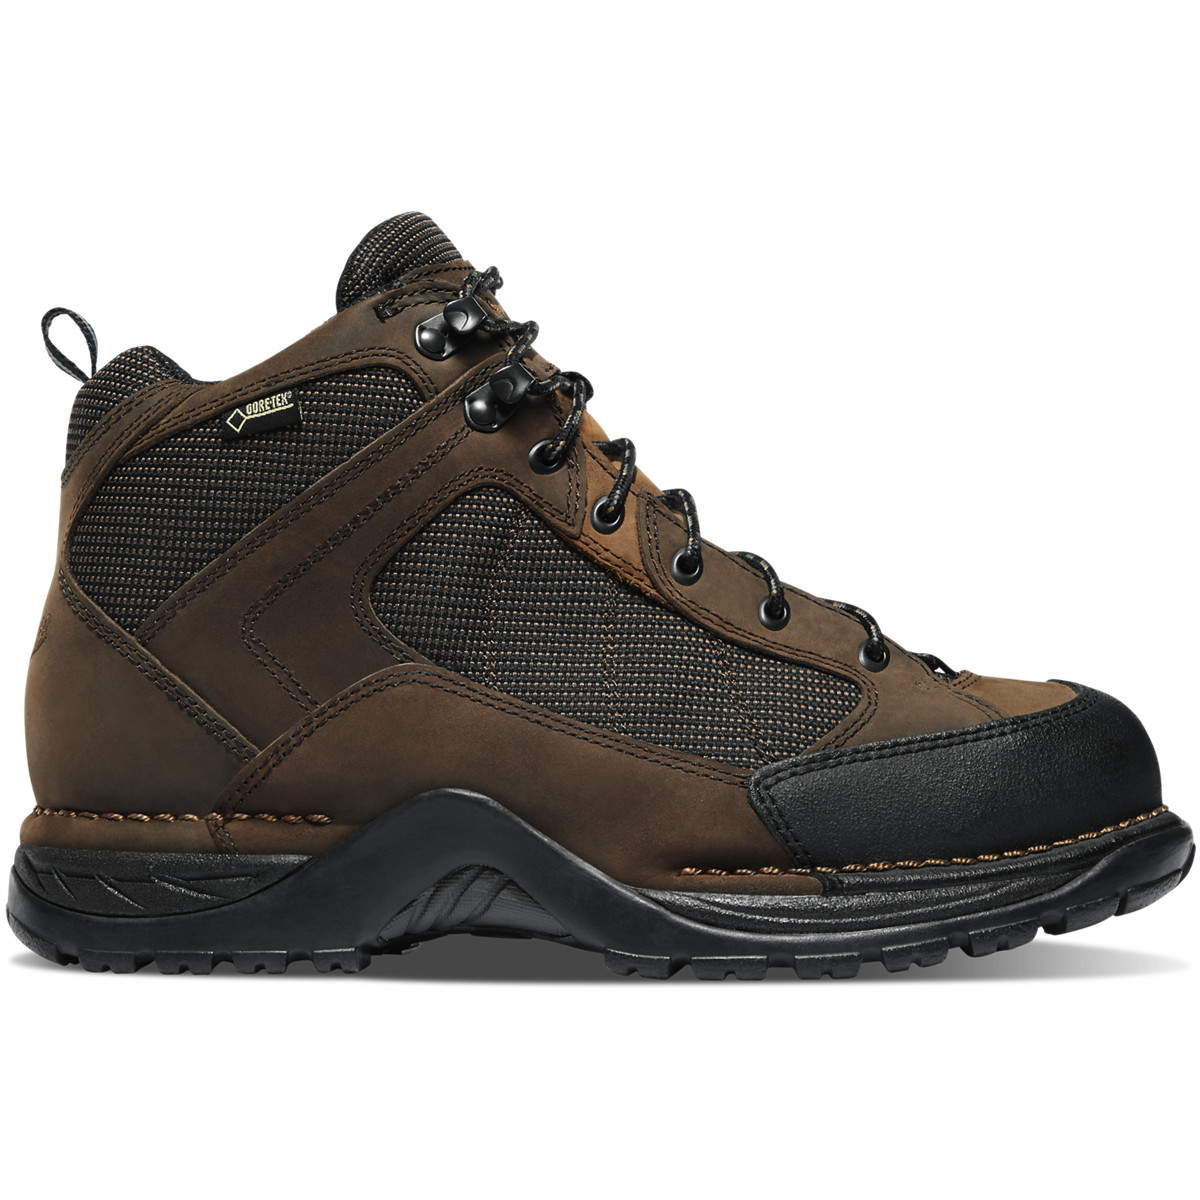 New Merrell Mens Pulsate Vent Fallen Rock Hiking Trail Shoes Nubuck Gray